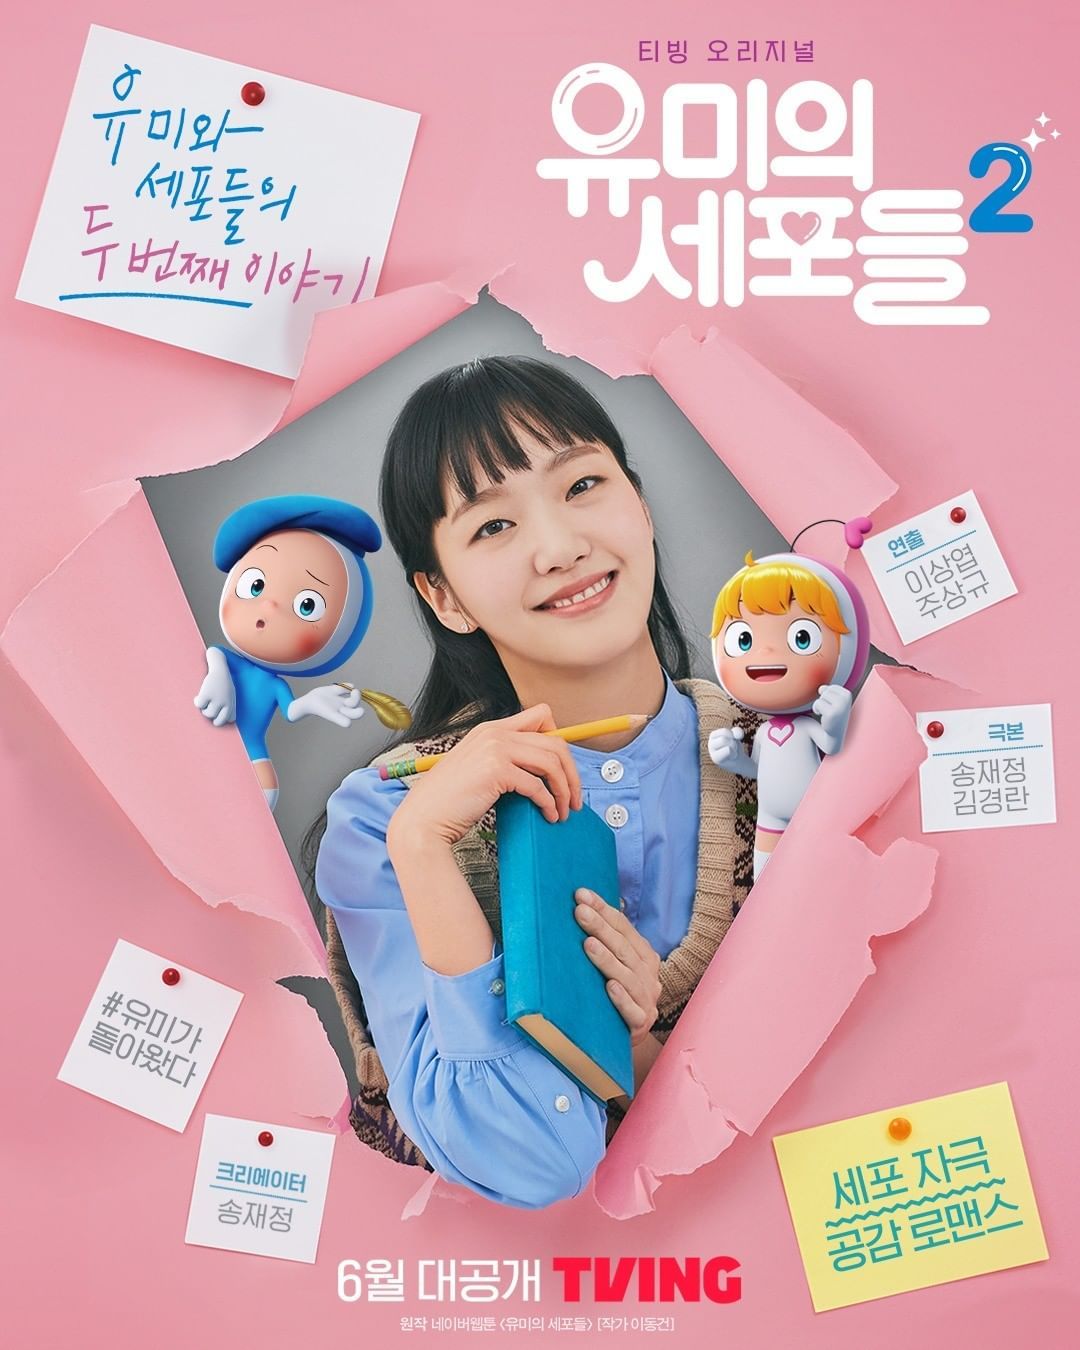 Drama 'Yumi Cells' Season 2 Rilis Poster, Akan Tayang Kapan? - Arah Kata